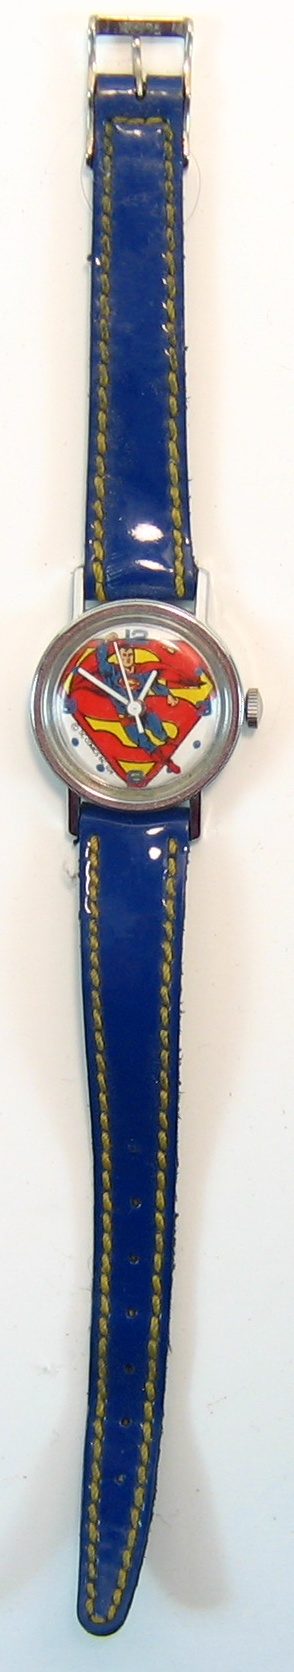 superman_70swatch2.jpg